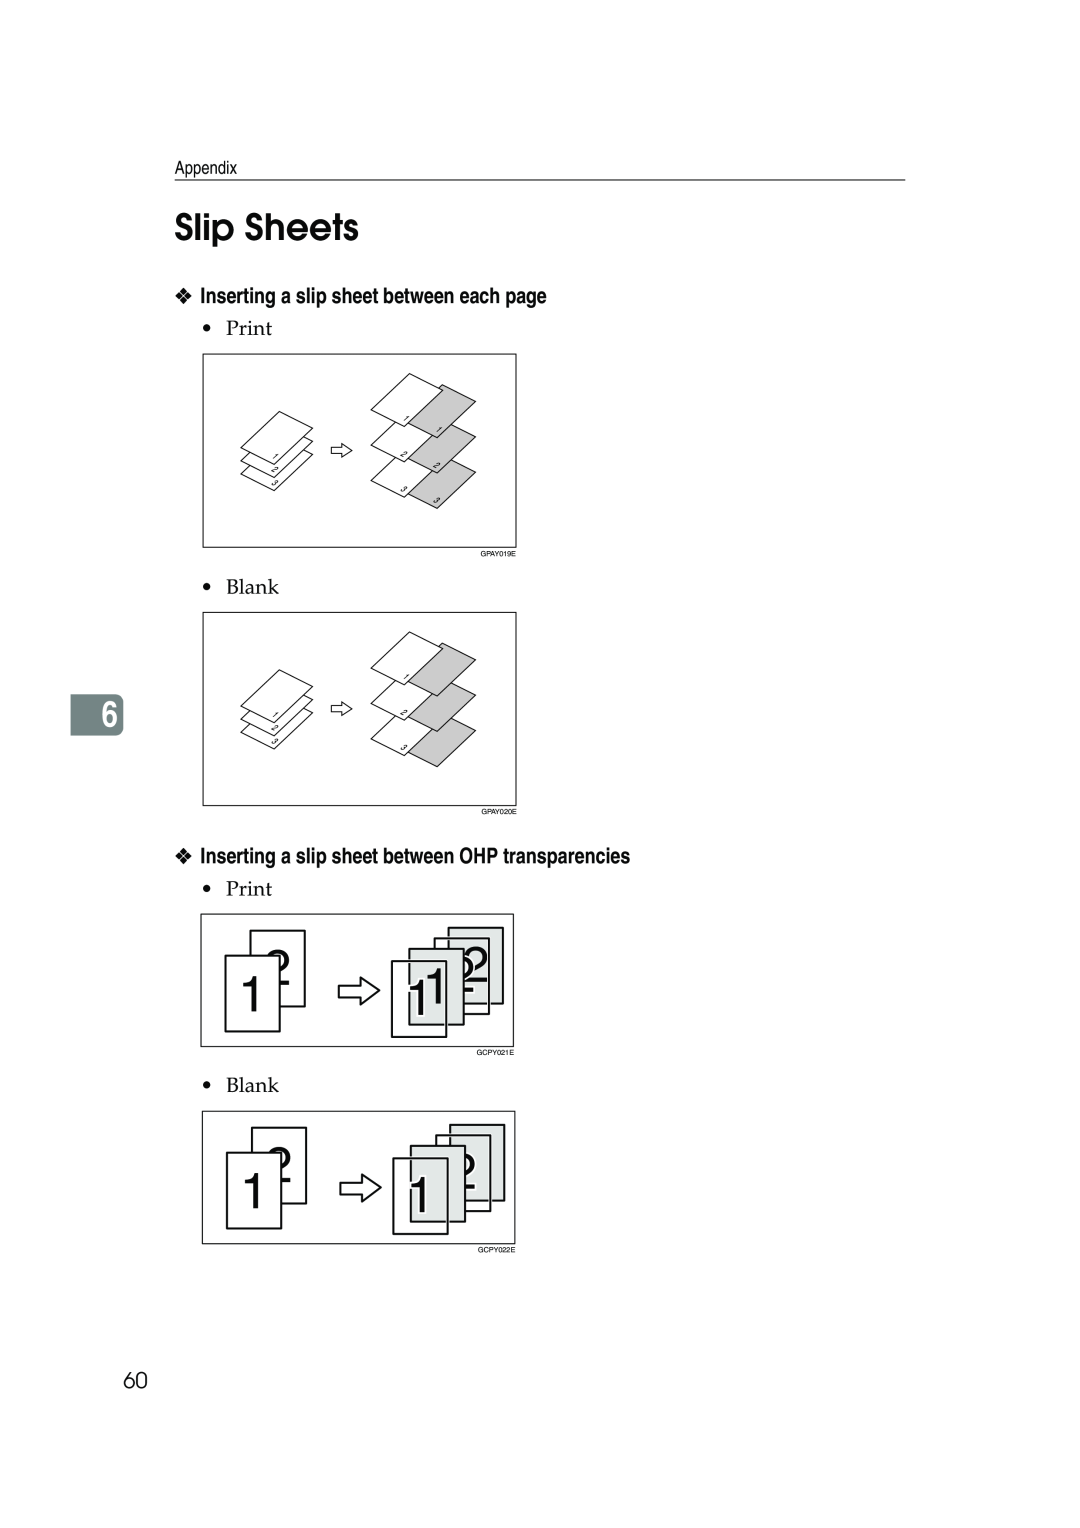 Xerox 2045e Slip Sheets, Inserting a slip sheet between each page, Inserting a slip sheet between OHP transparencies 